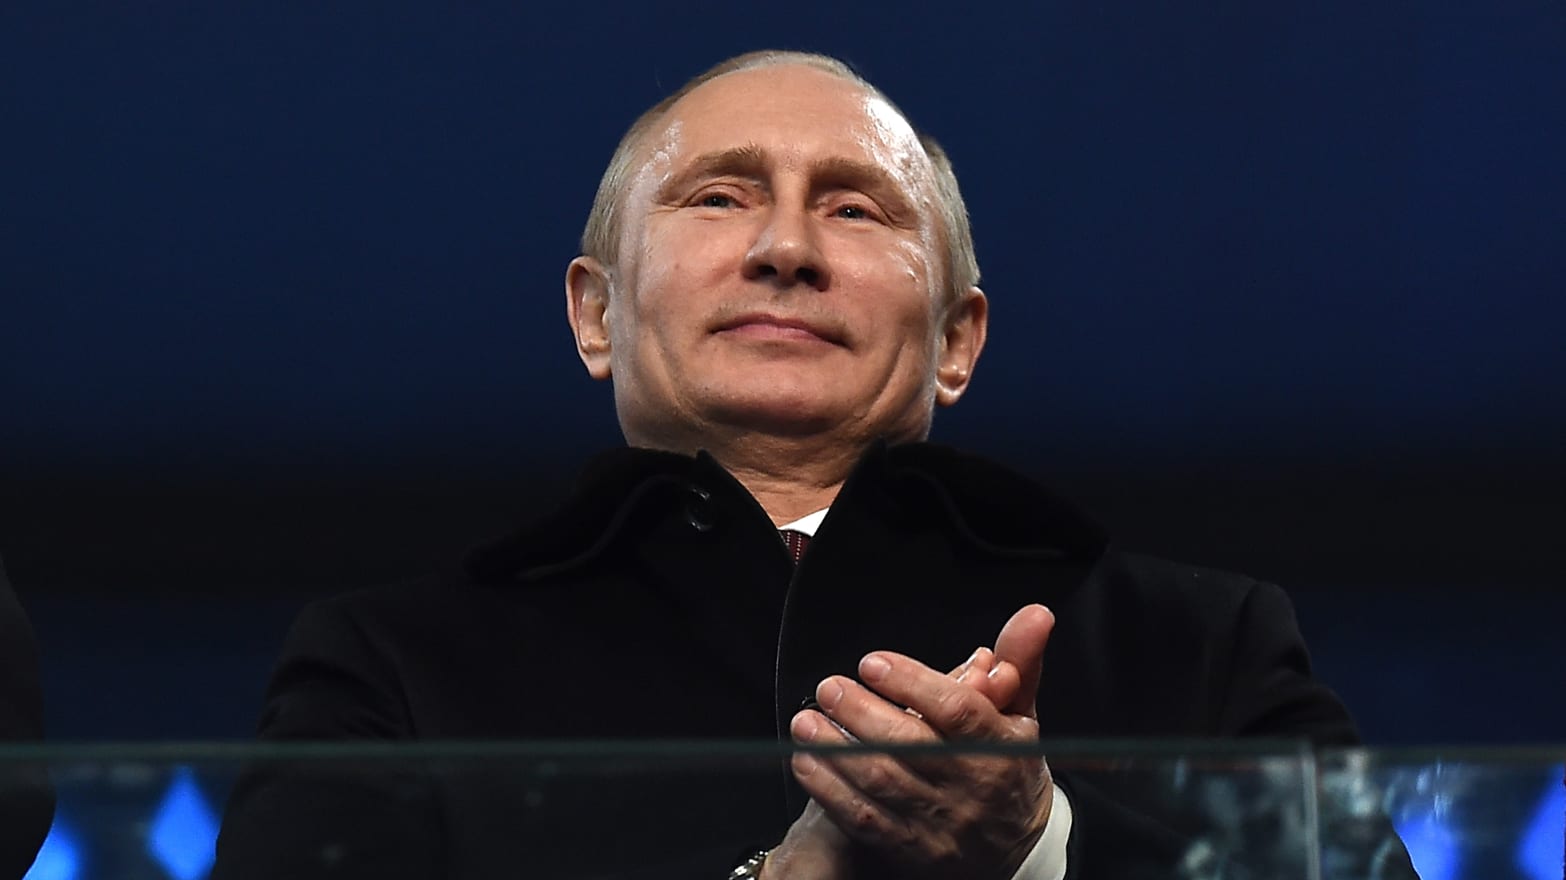 Russian President Vladimir Putin in Sochi, Russia.